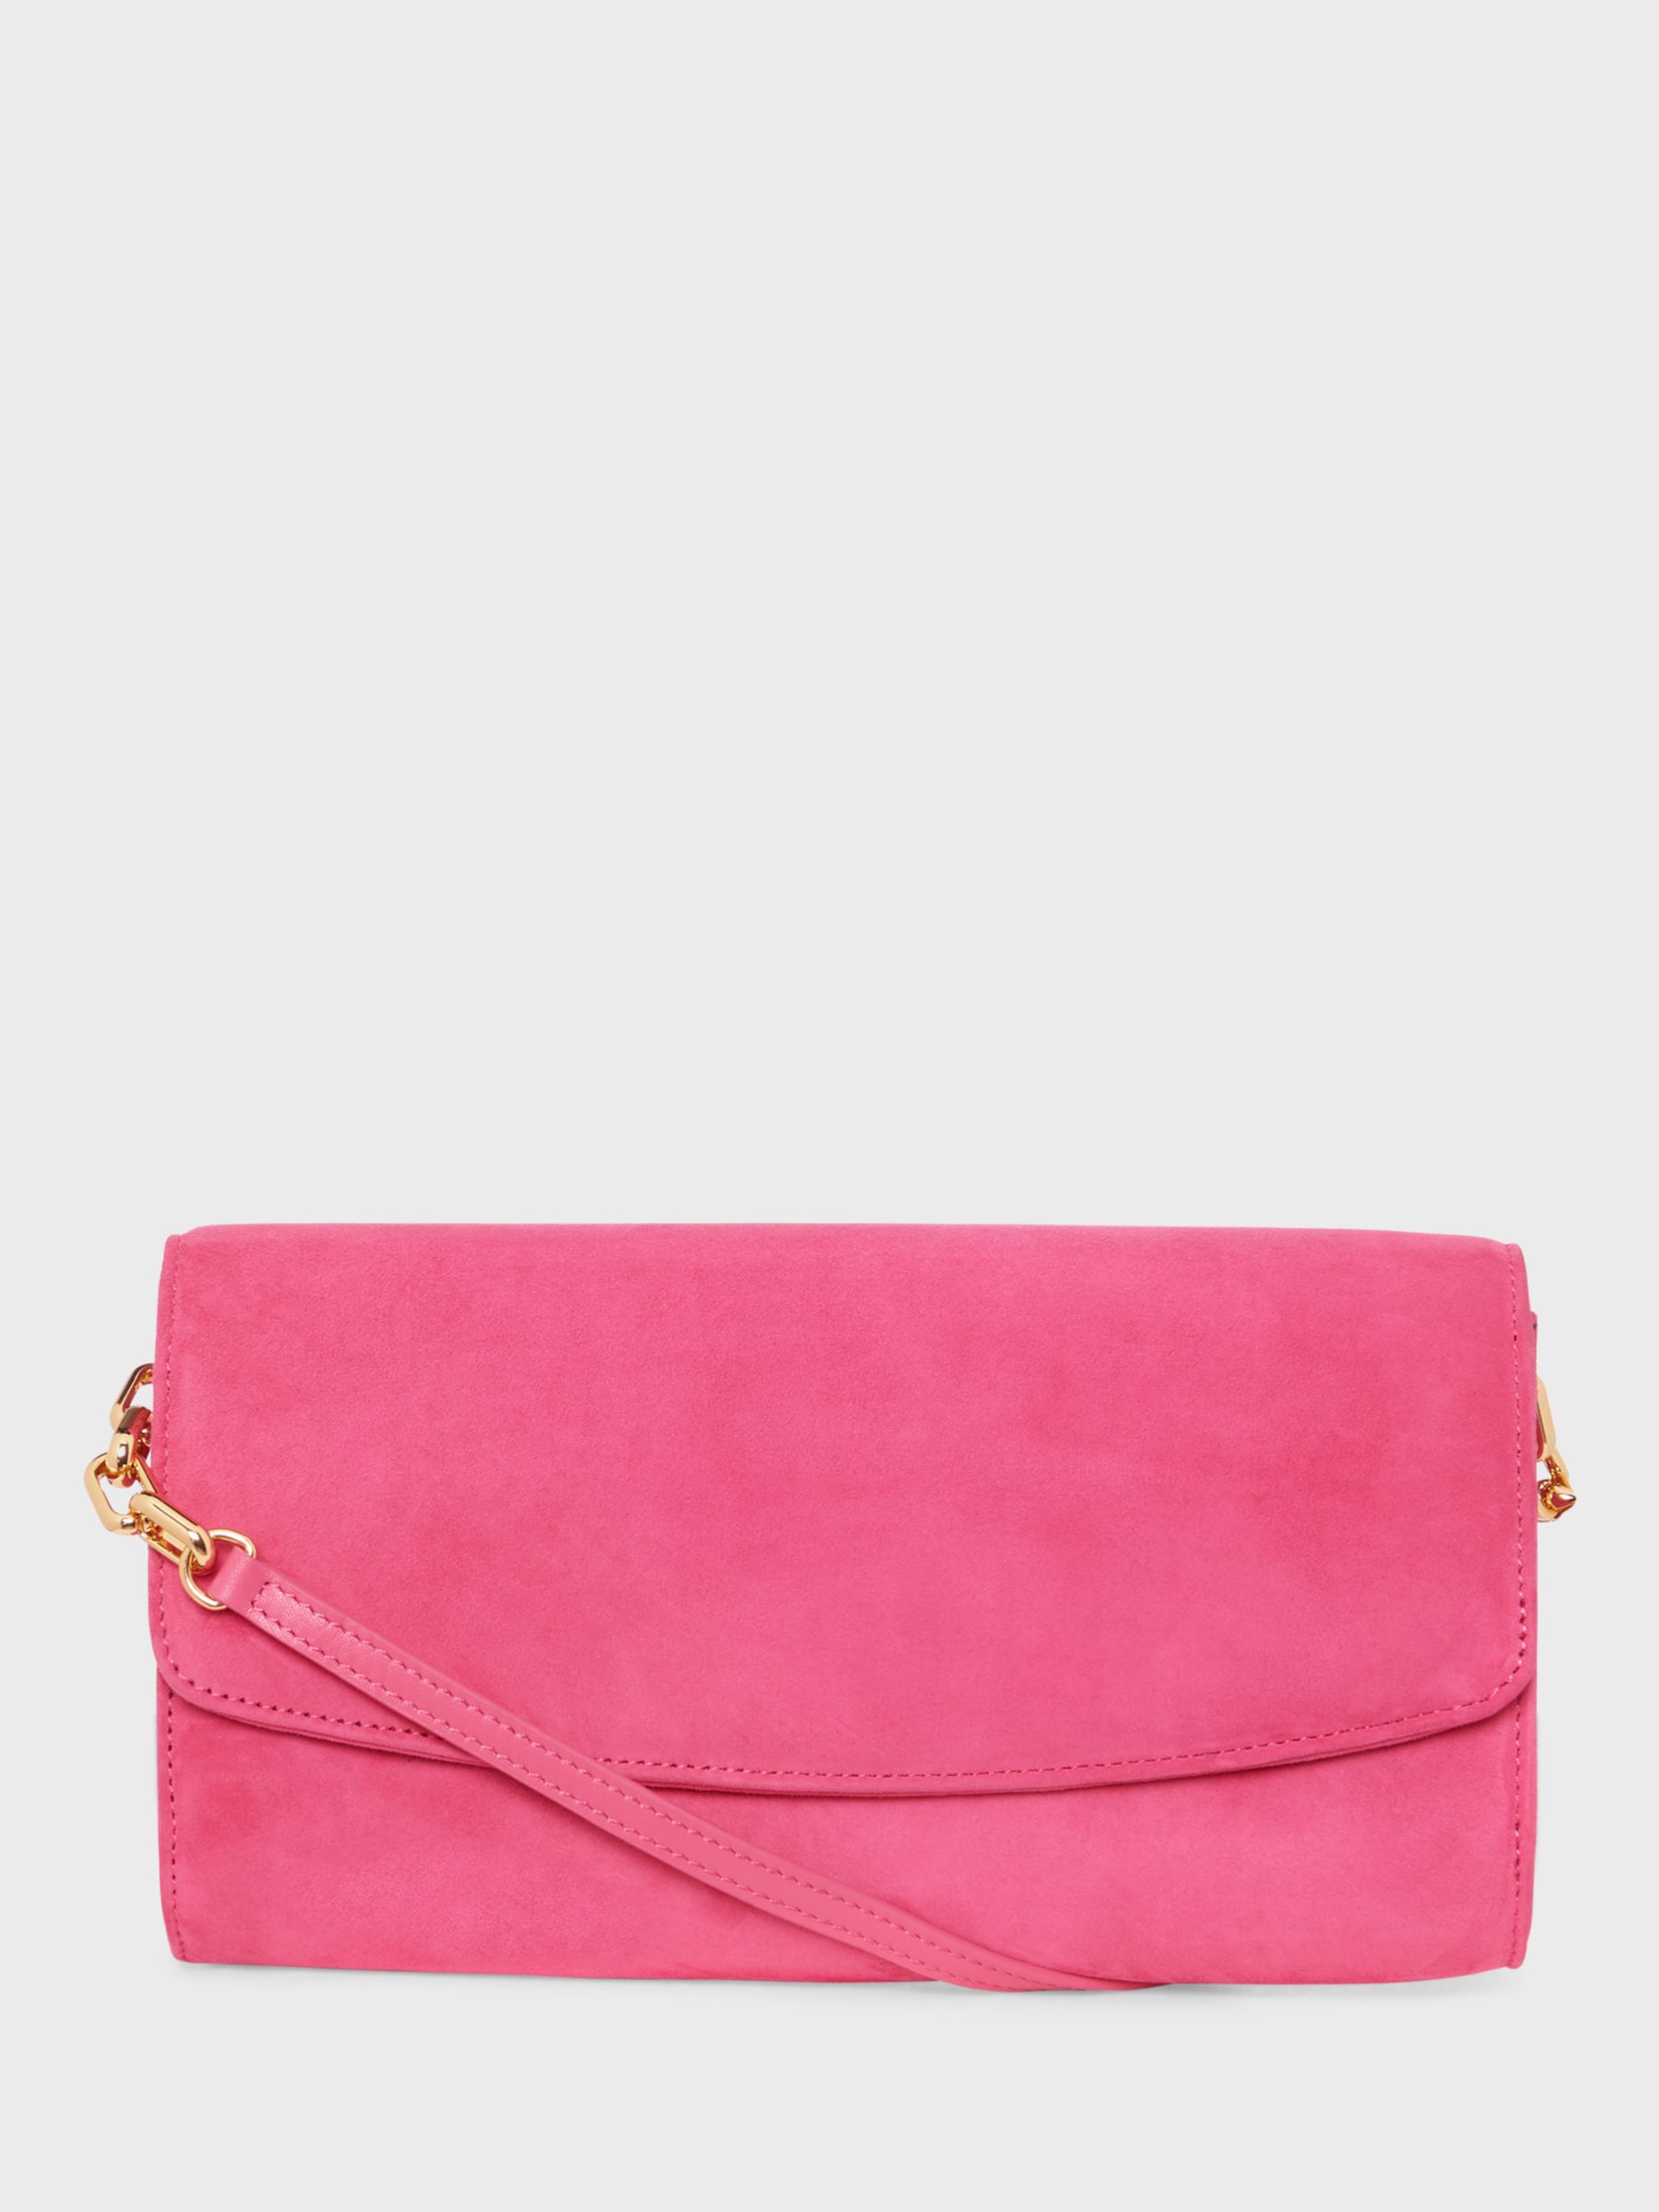 Hobbs Sarah Leather Clutch Bag, Bright Pink at John Lewis & Partners